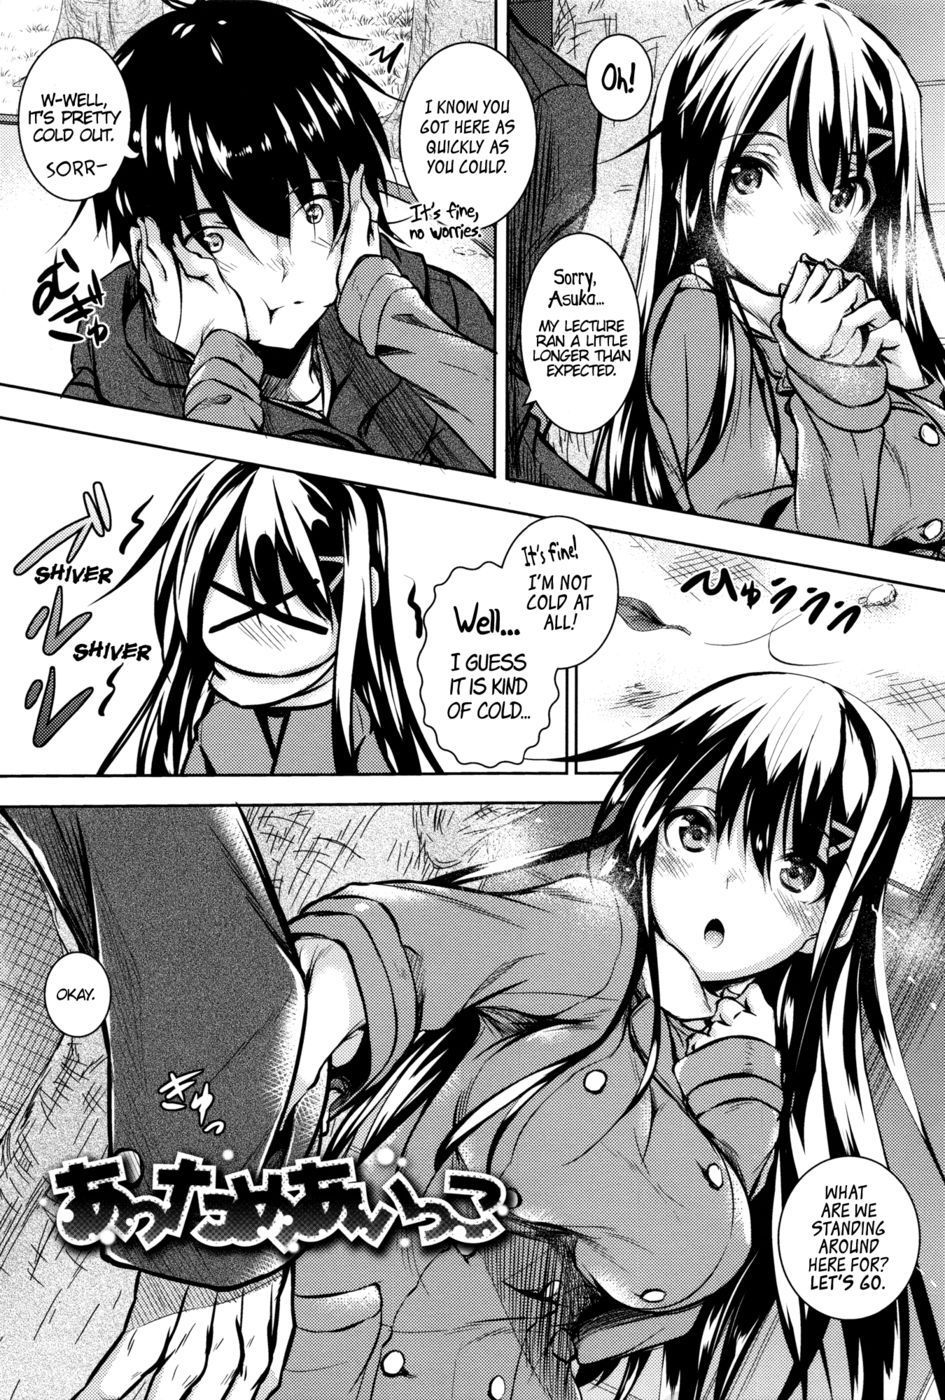 Warm Up Together 1 | Naughty Adult Hentai Comic Manga Asuka Story